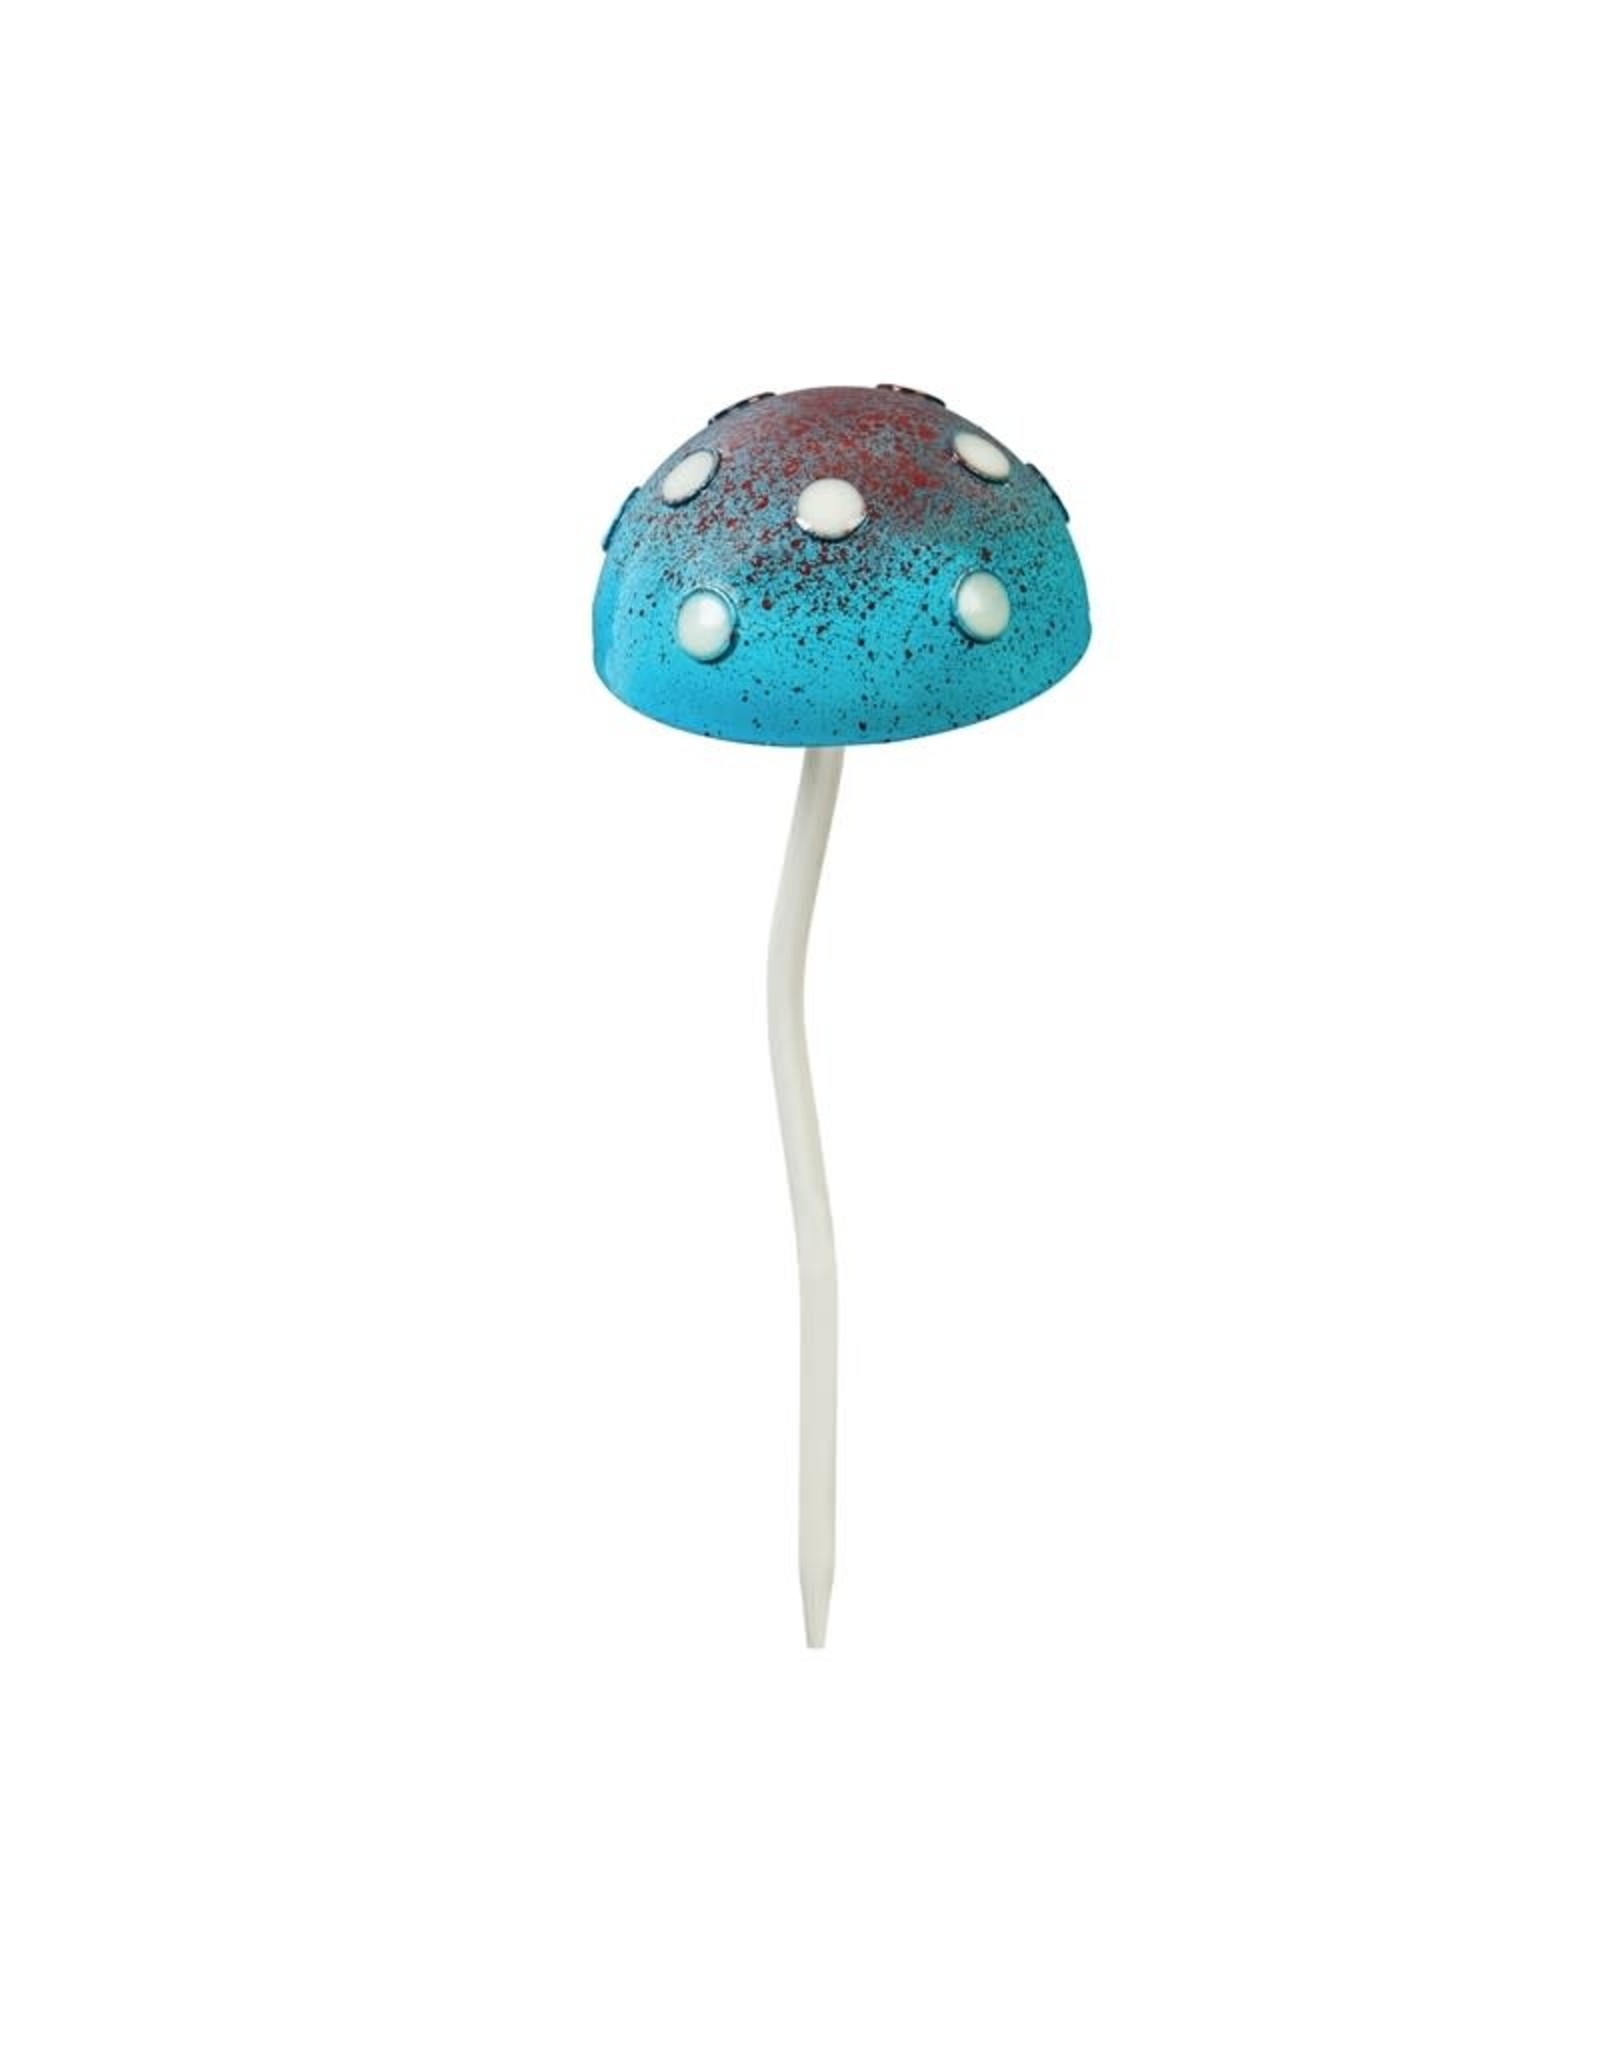 Glow in the Dark Mushroom Stake - Blue